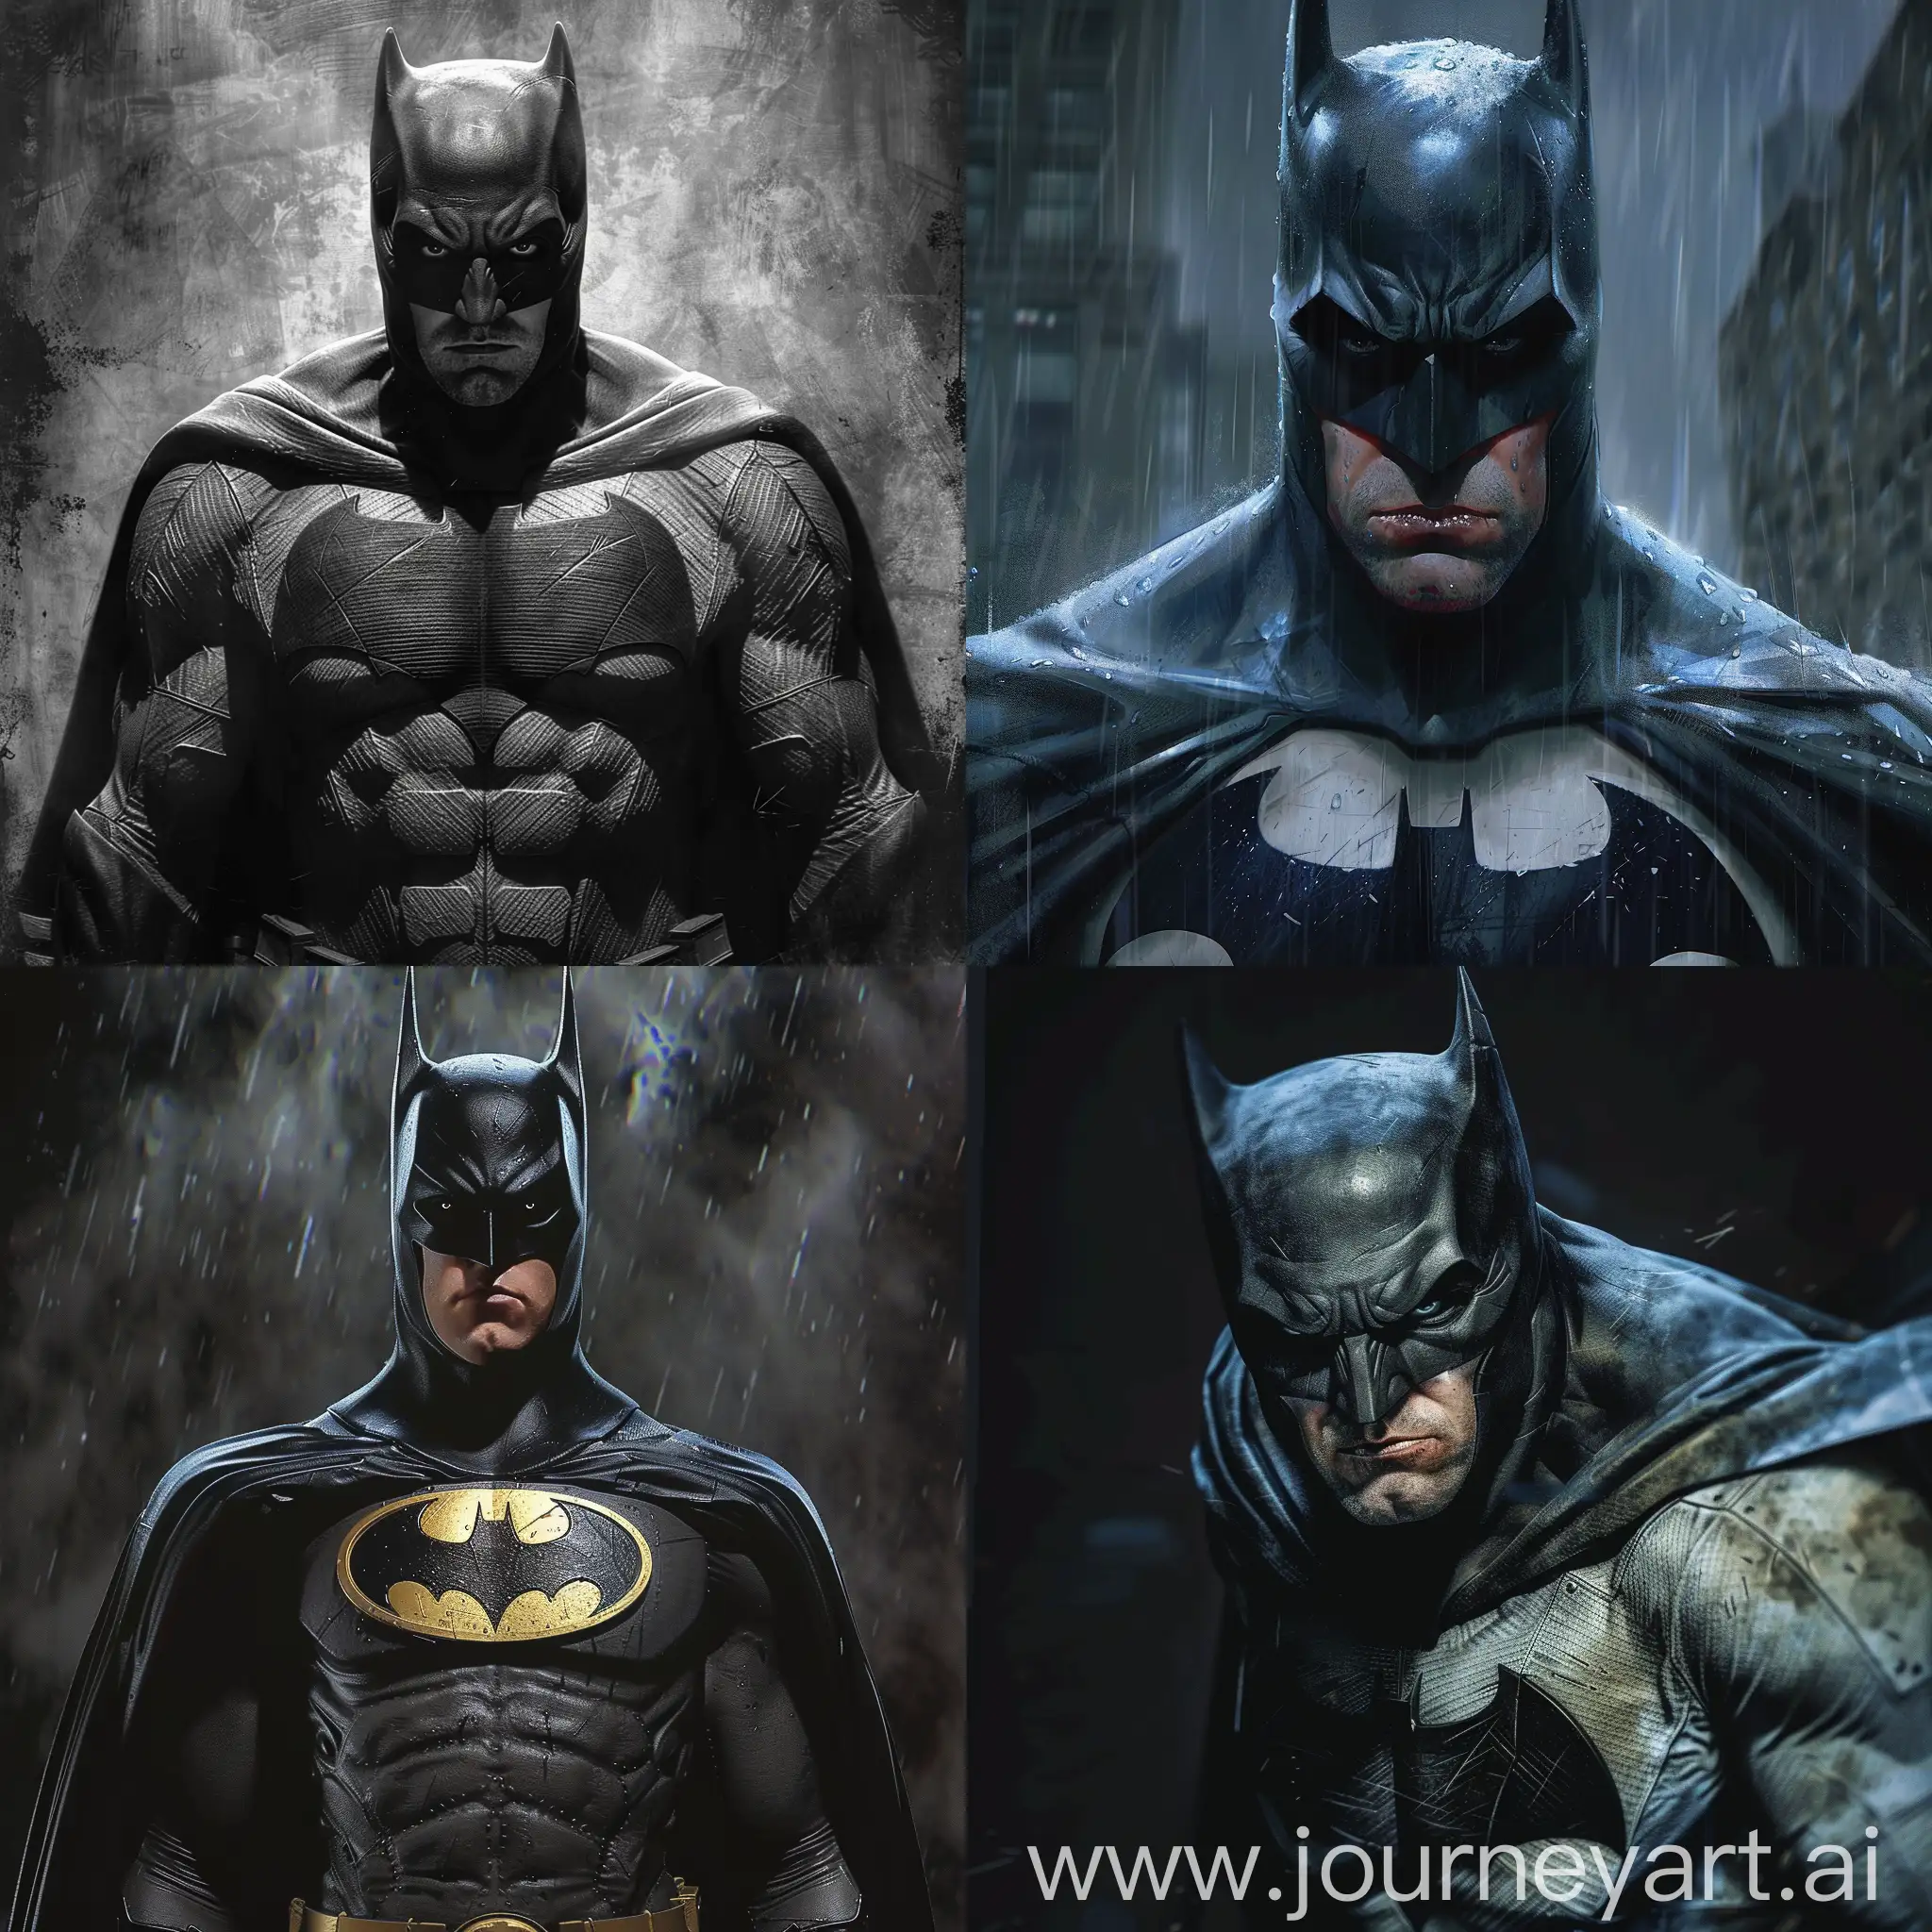 Batman-Versus-Villain-in-Dynamic-Action-Scene